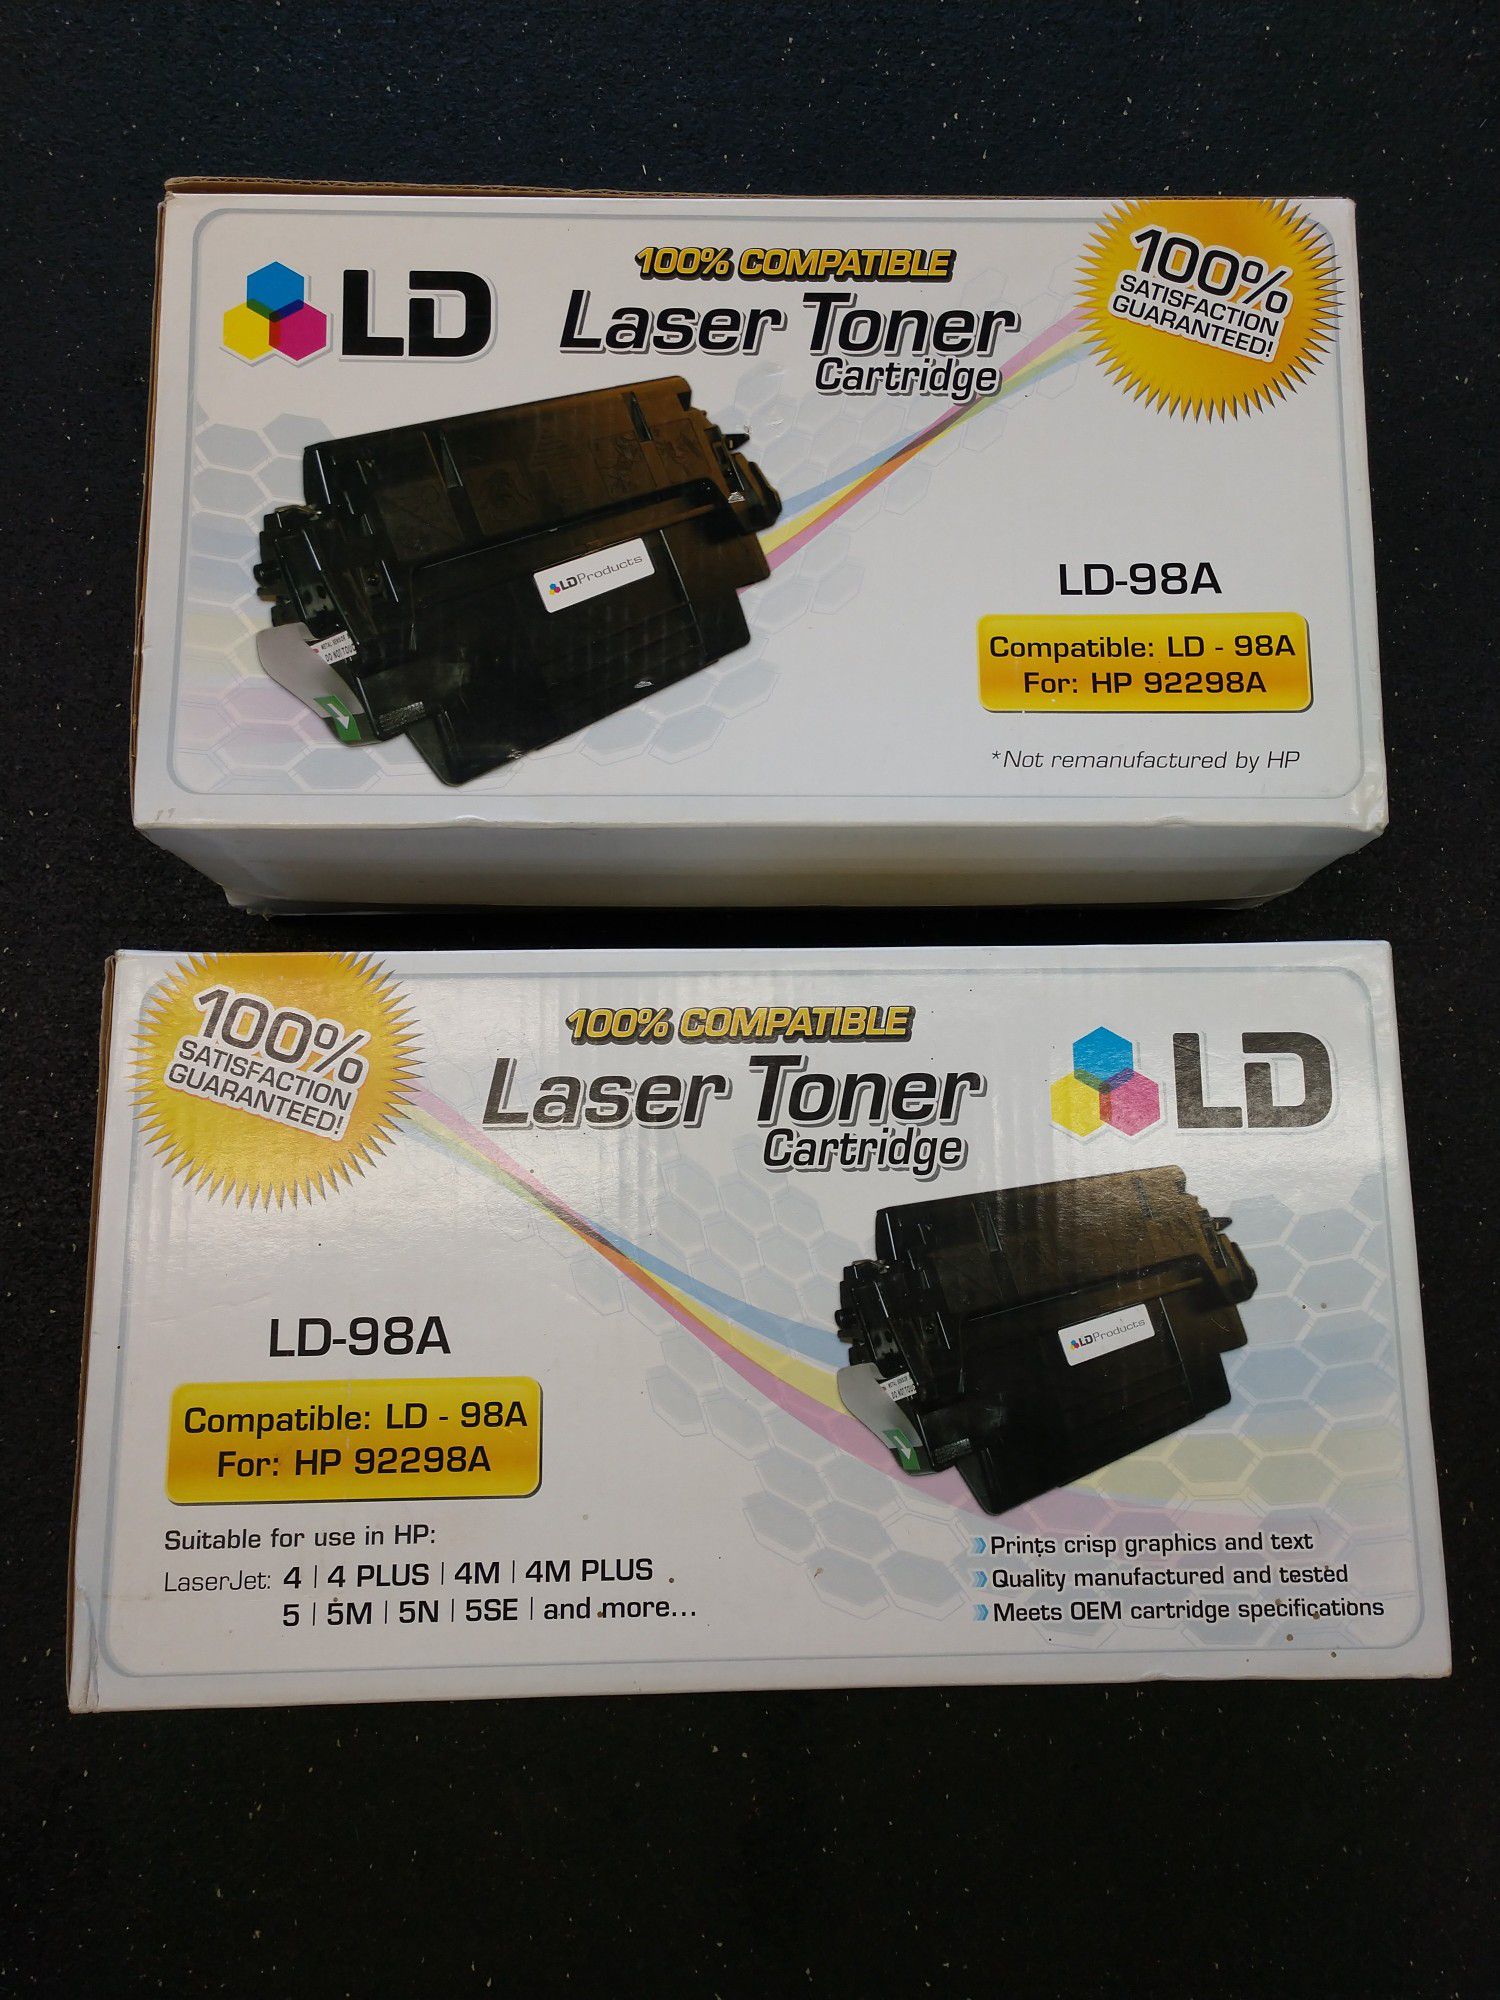 LD-98A LaserToner Cartridges - Copier Ink - 2 Sealed Cartons - Black